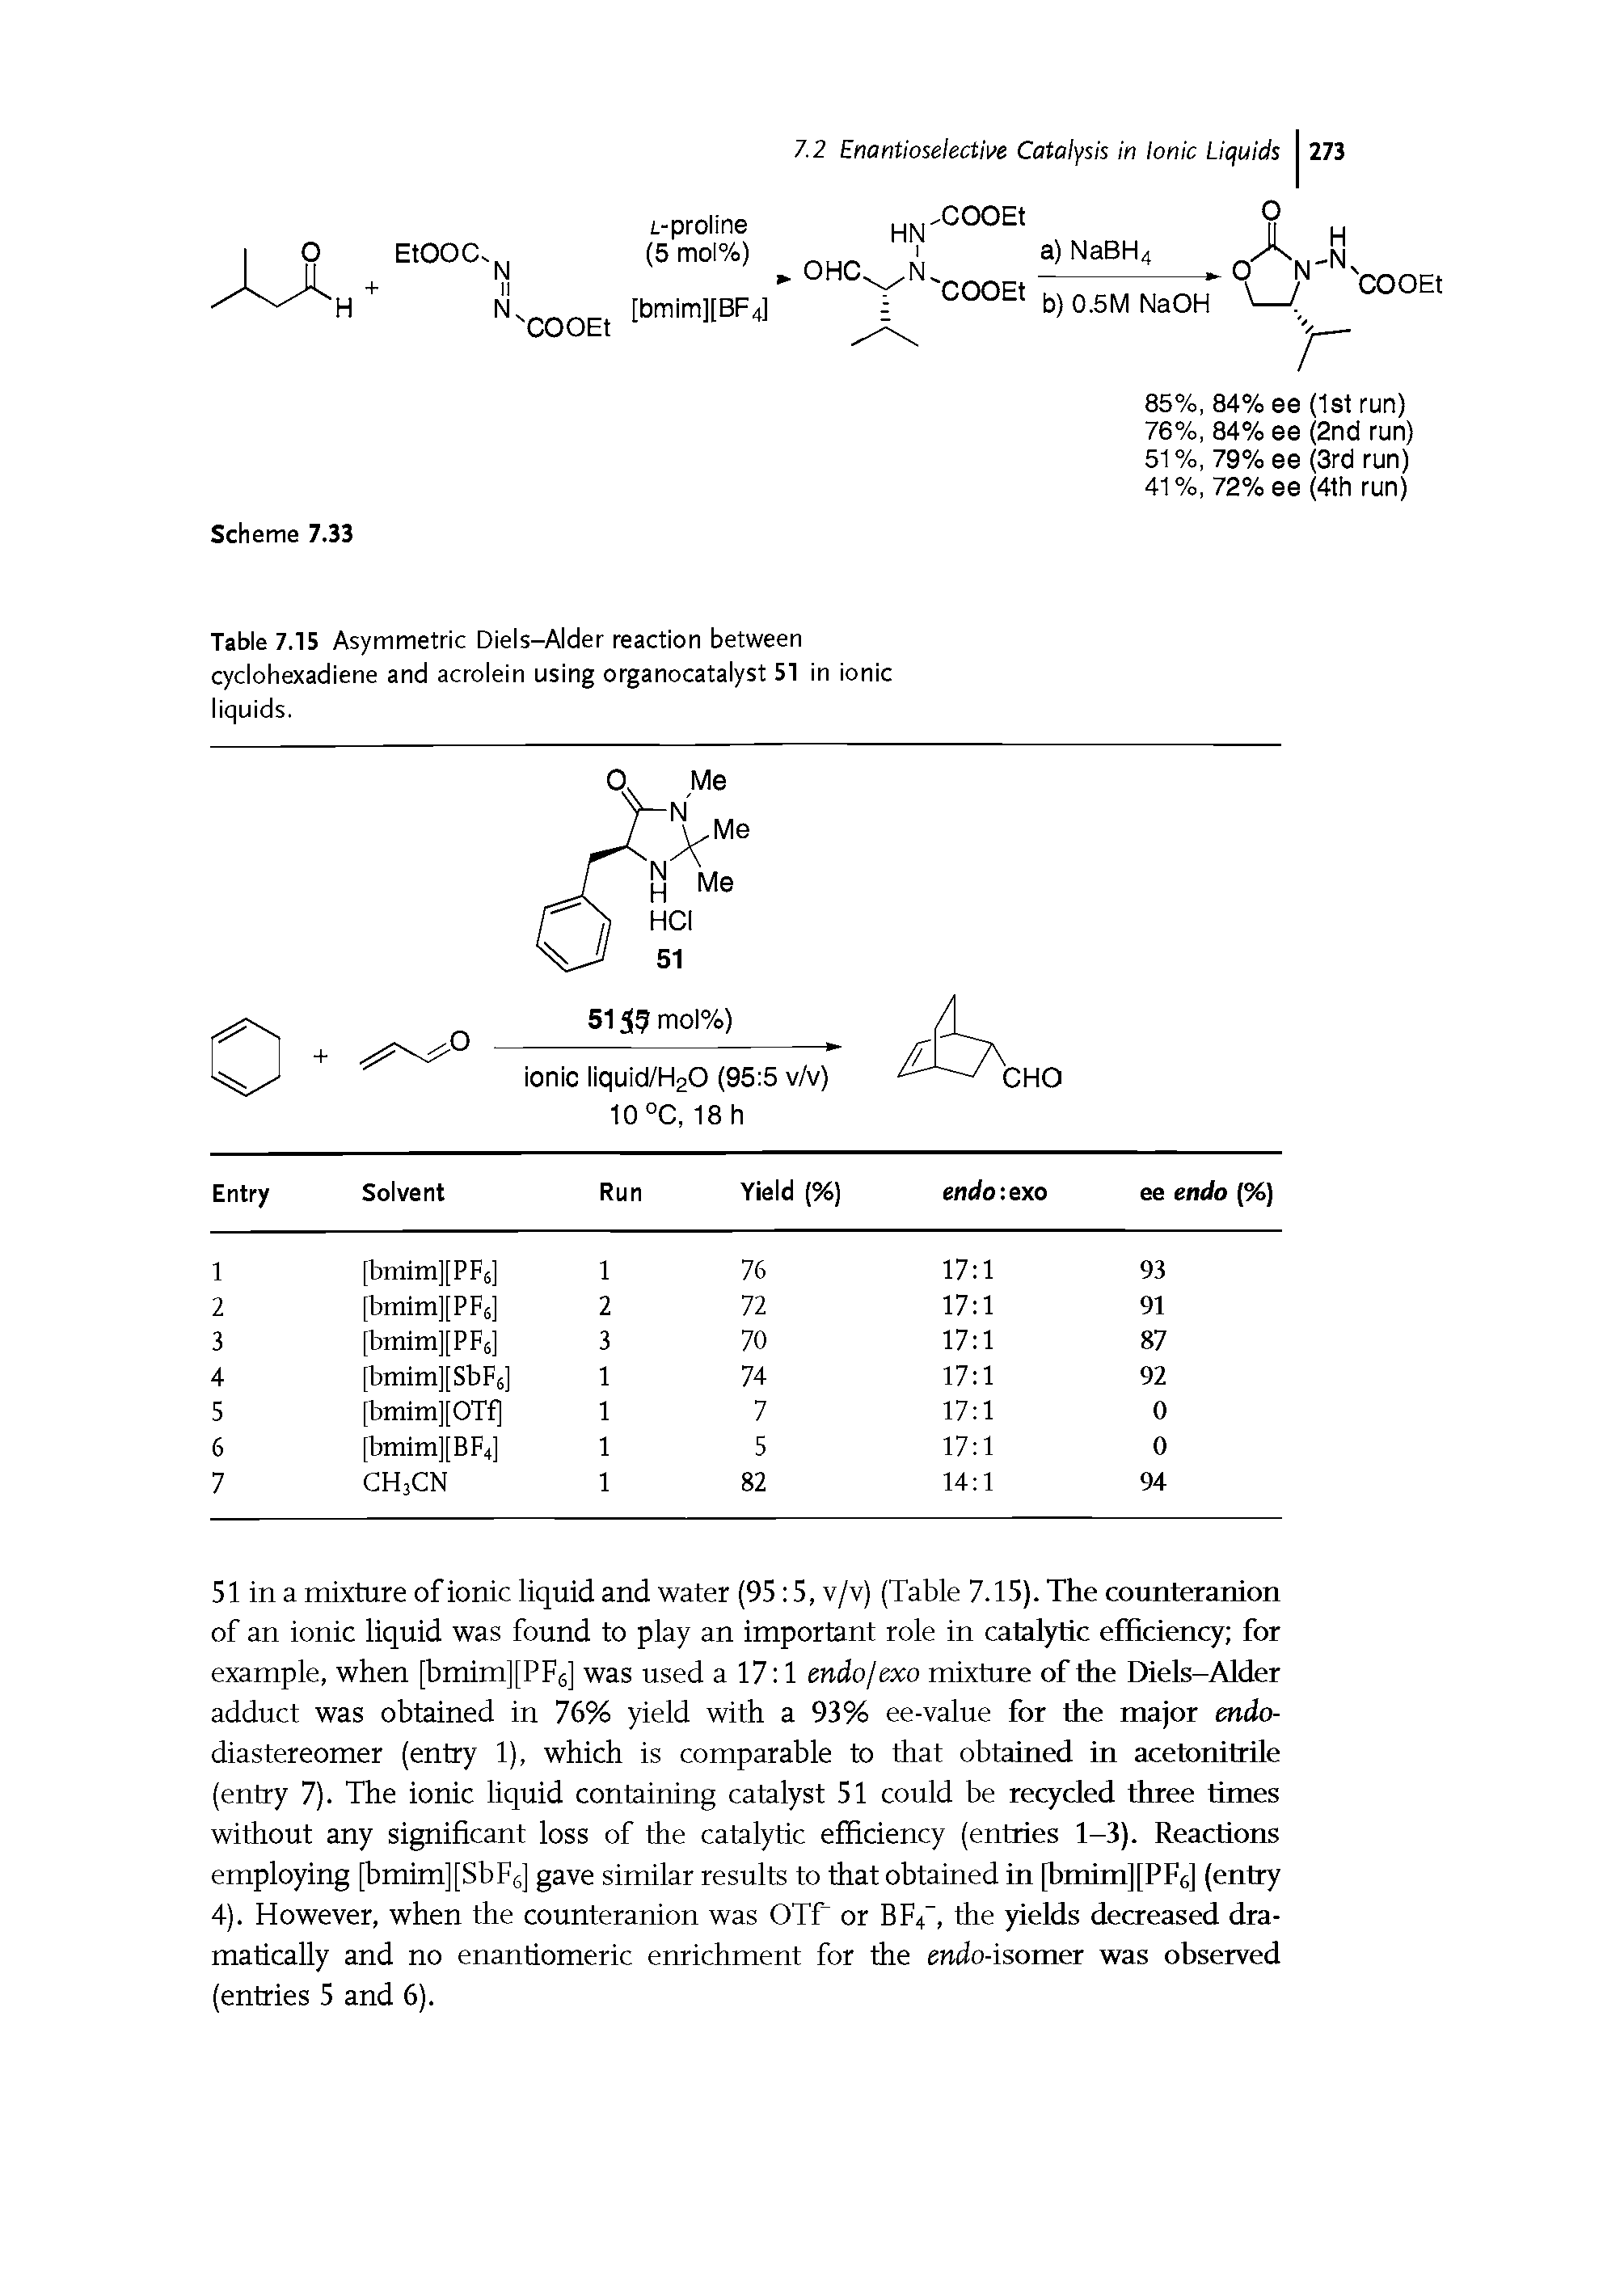 Table 7.15 Asymmetric Diels-Alder reaction between cyclohexadiene and acrolein using organocatalyst 51 in ionic liquids.